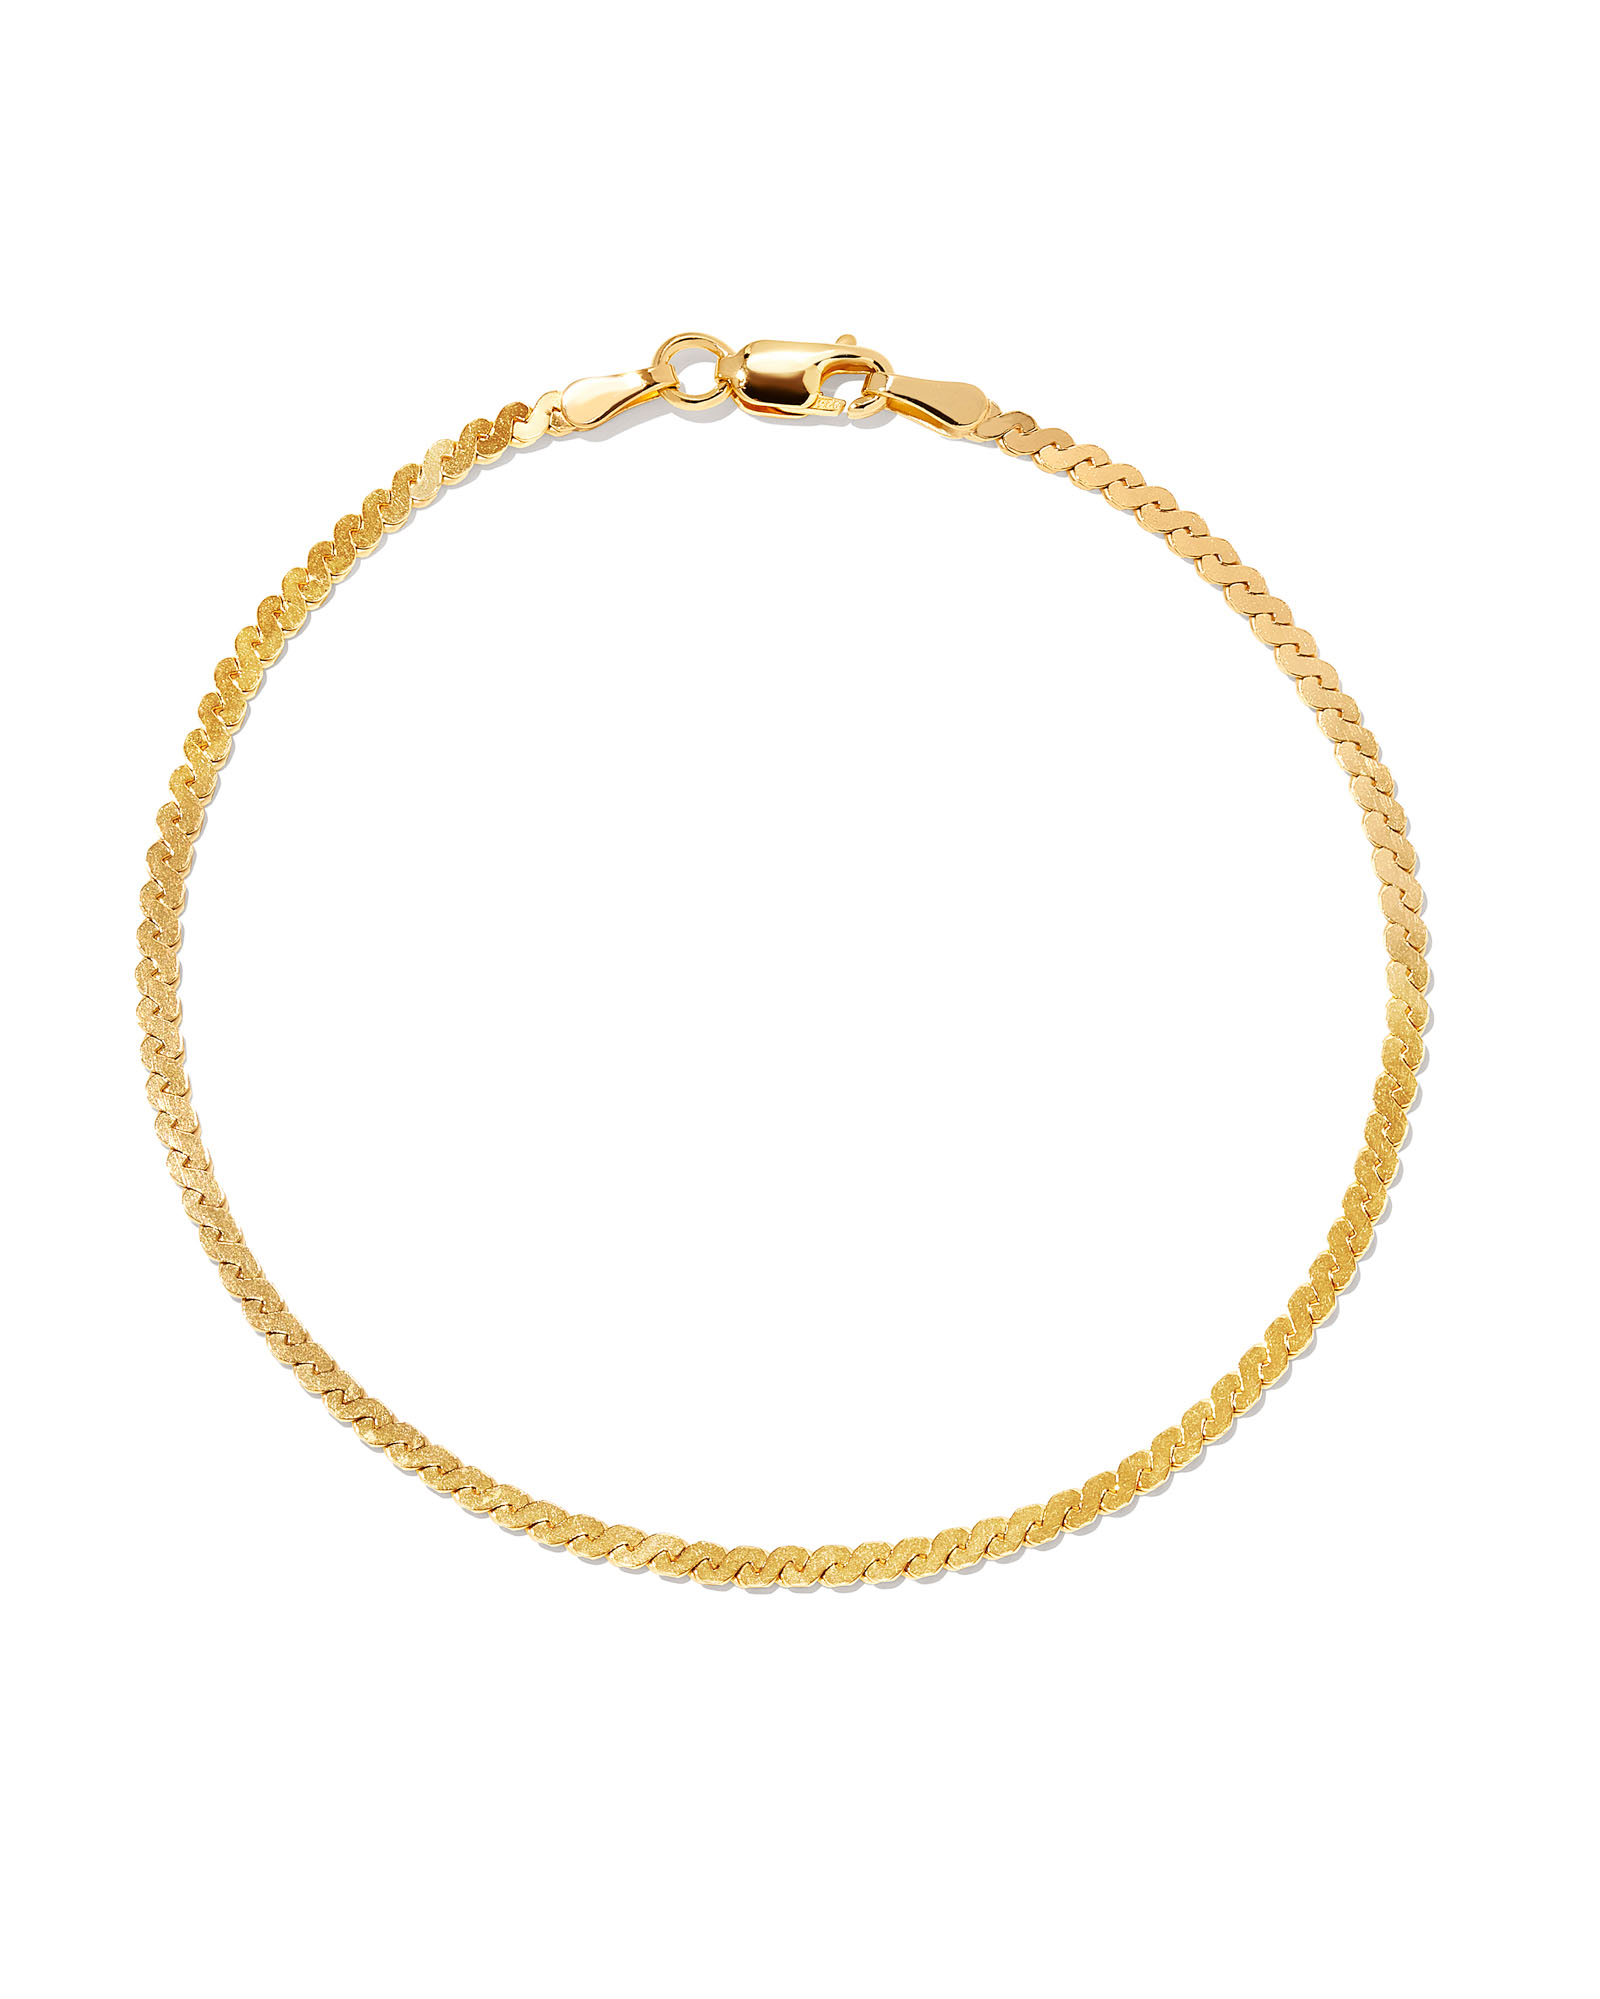 Serpentine Chain Bracelet in 18k Gold Vermeil | Kendra Scott